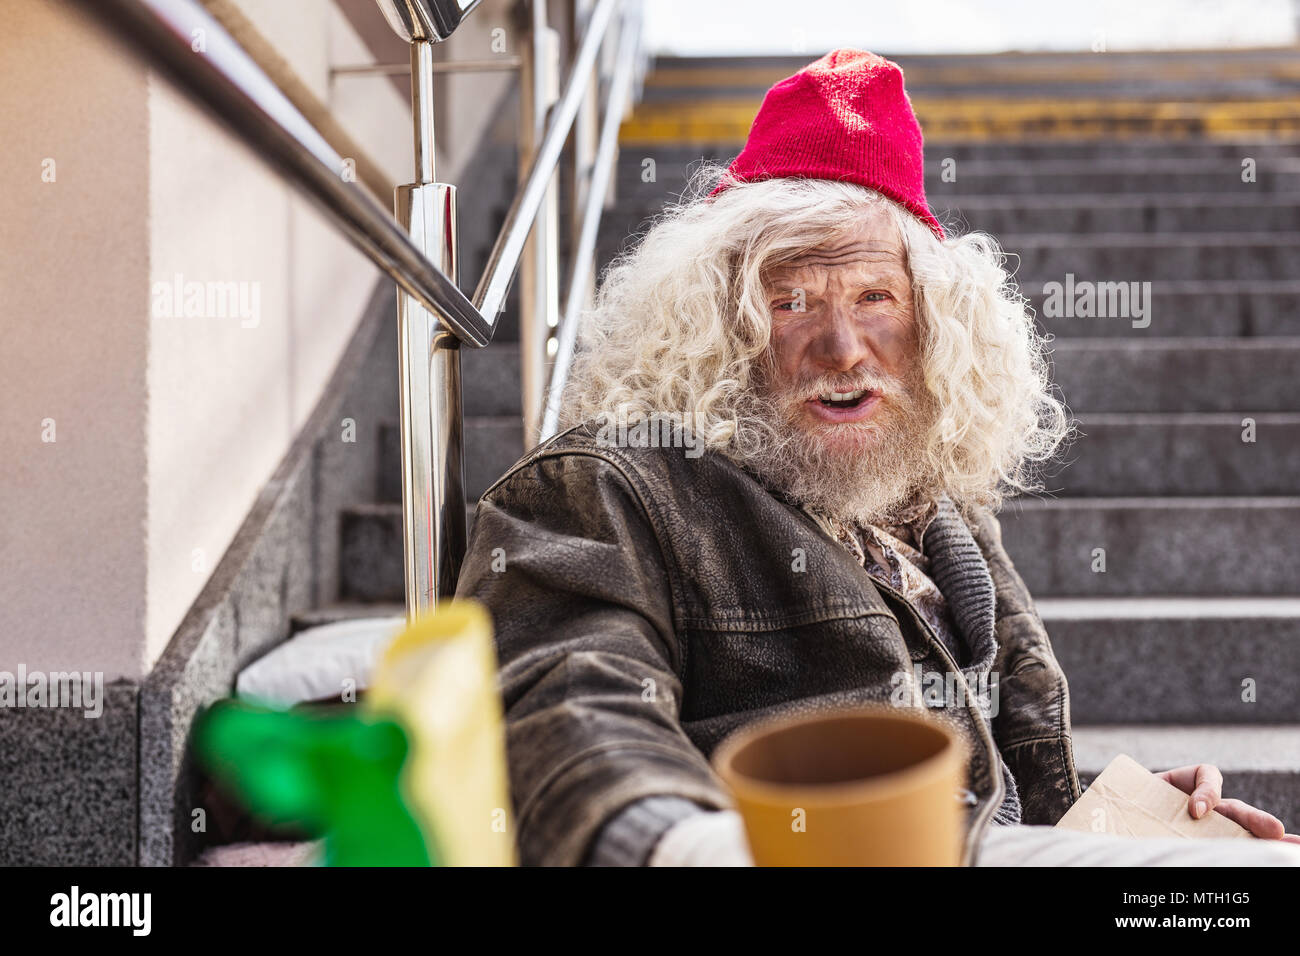 Cheerless homeless man sitting on the street Stock Photo